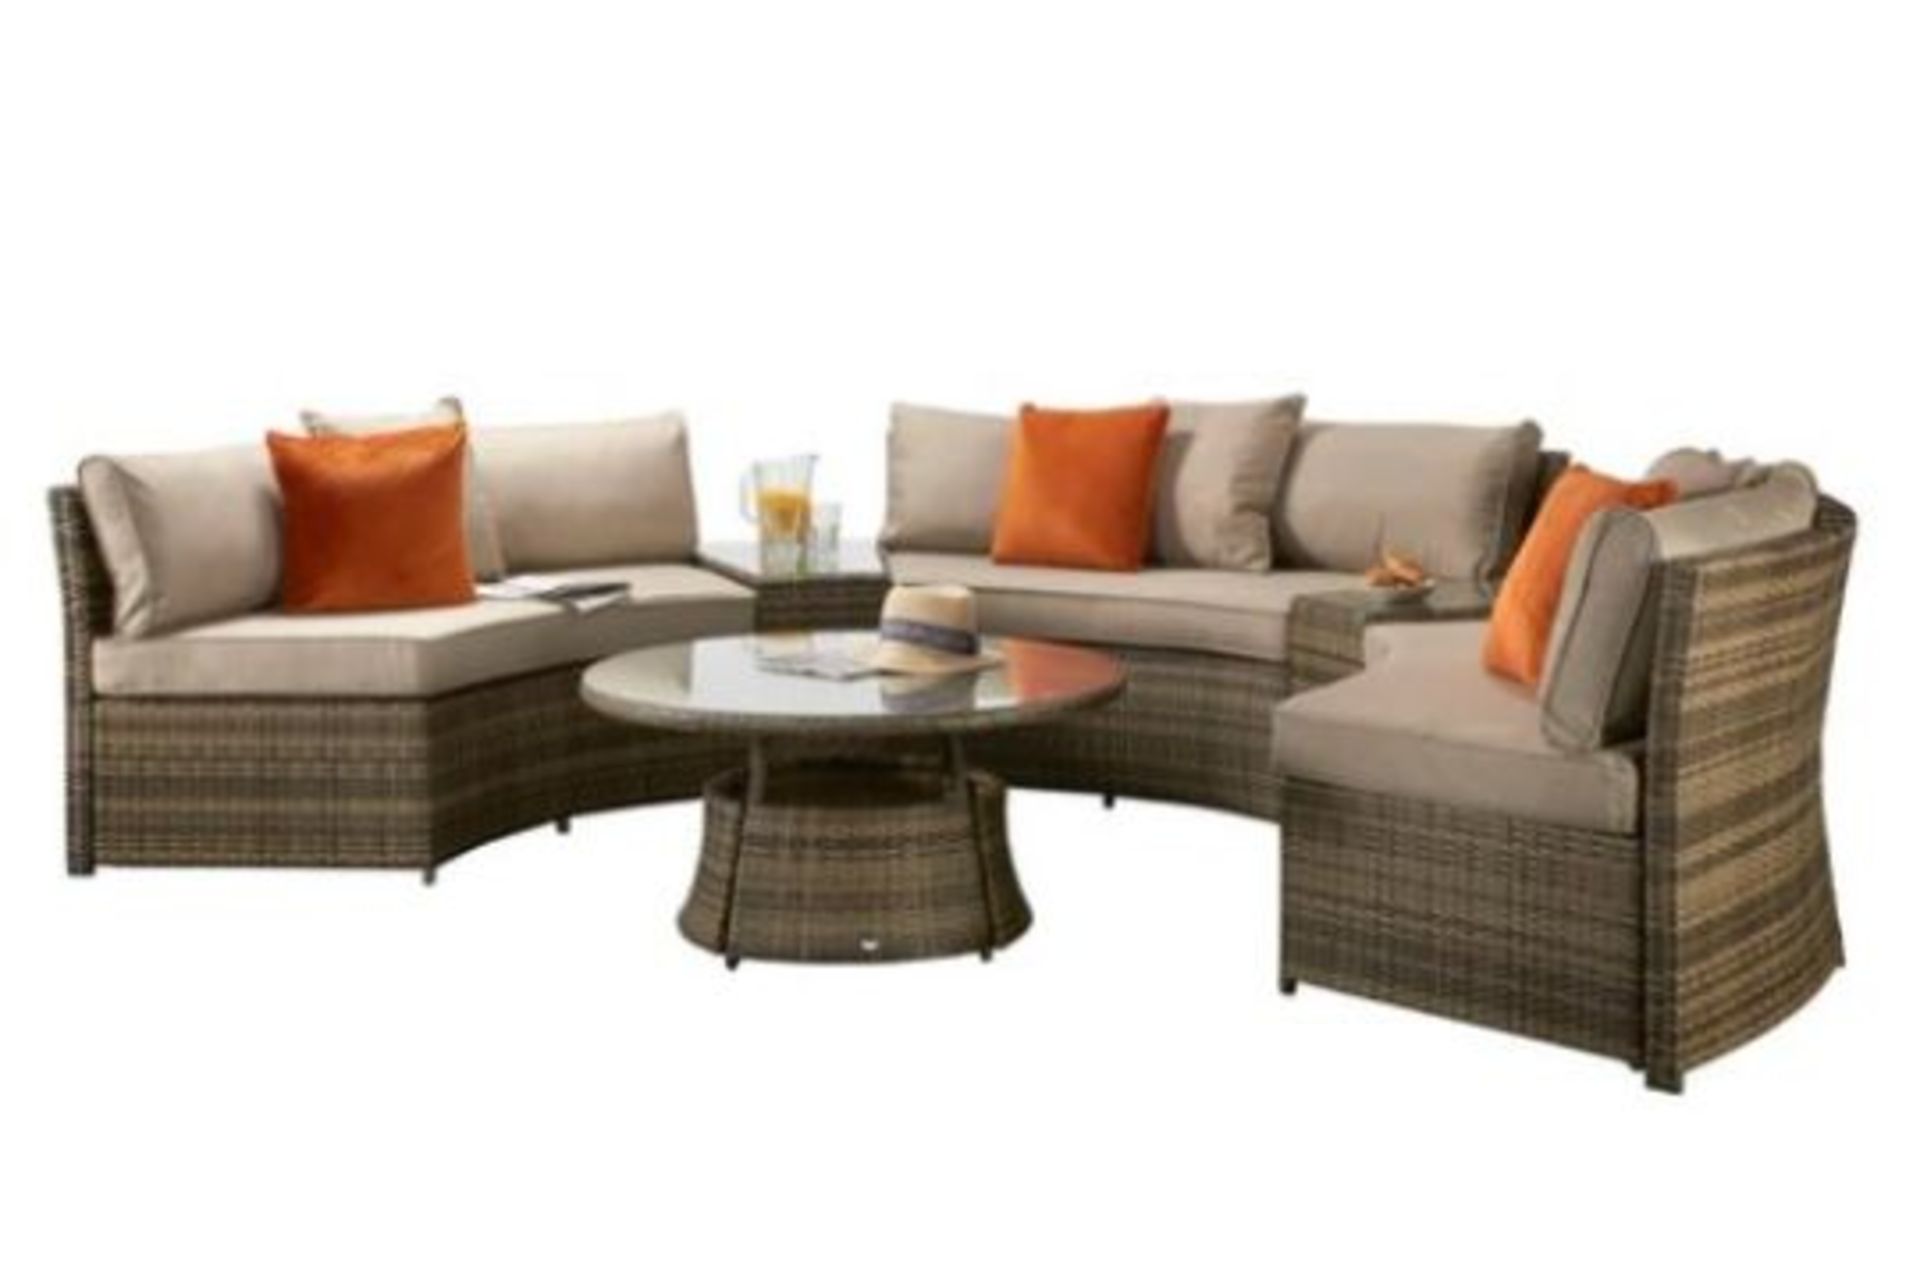 New & Boxed Luxury Signature Weave Garden Furniture - Juliet Brown Half Moon Sofa Set. RRP £2,999. - Image 2 of 3